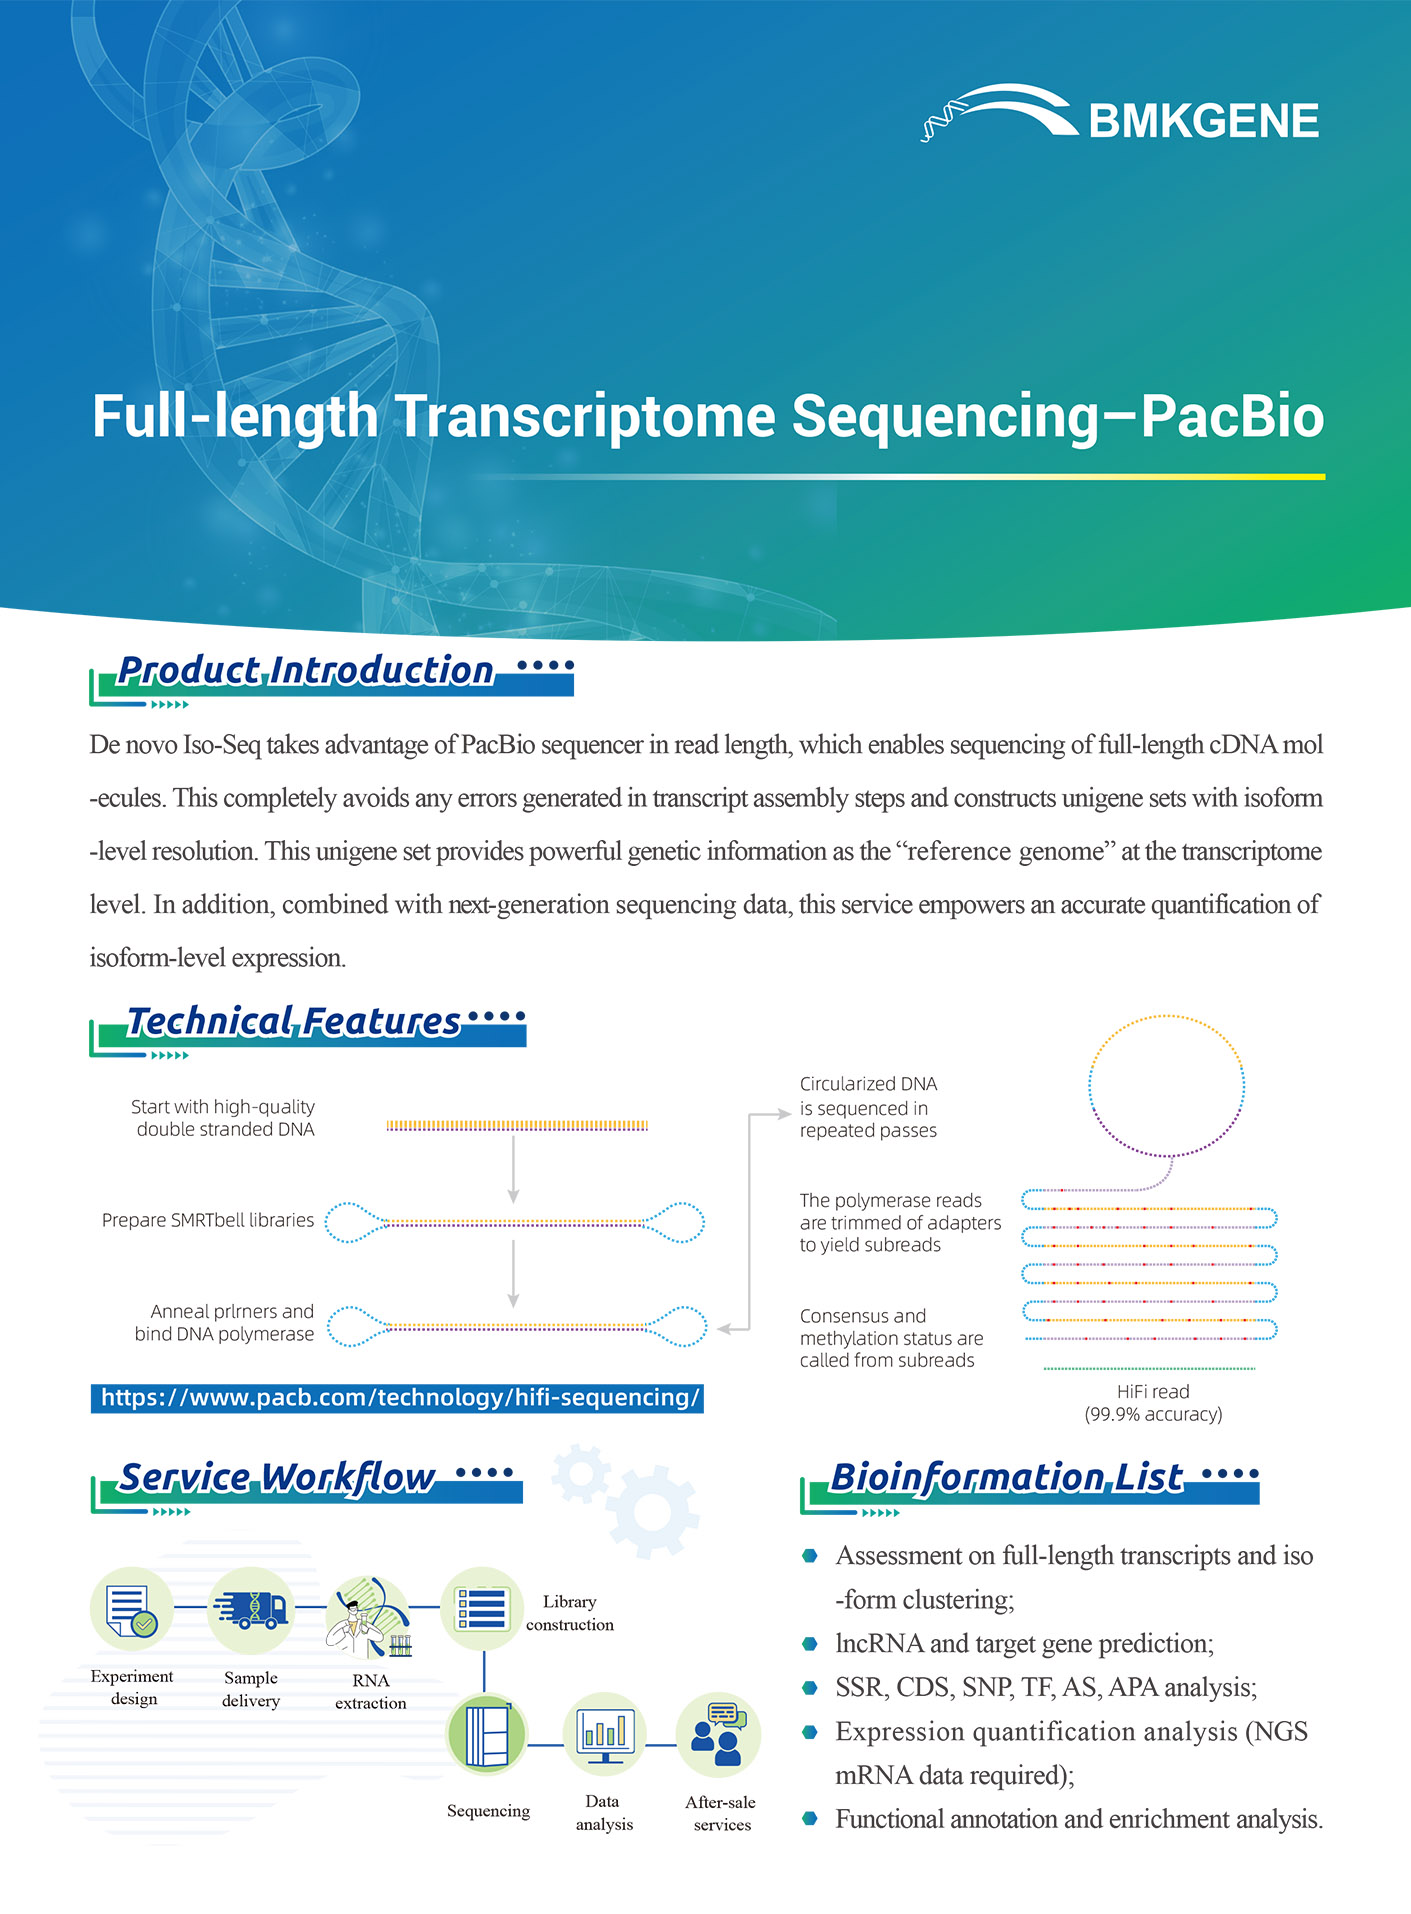 http://www.bmkgene.com/uploads/Full-length-Transcriptome-Sequencing–PacBio-BMKGENE-2023.124.pdf